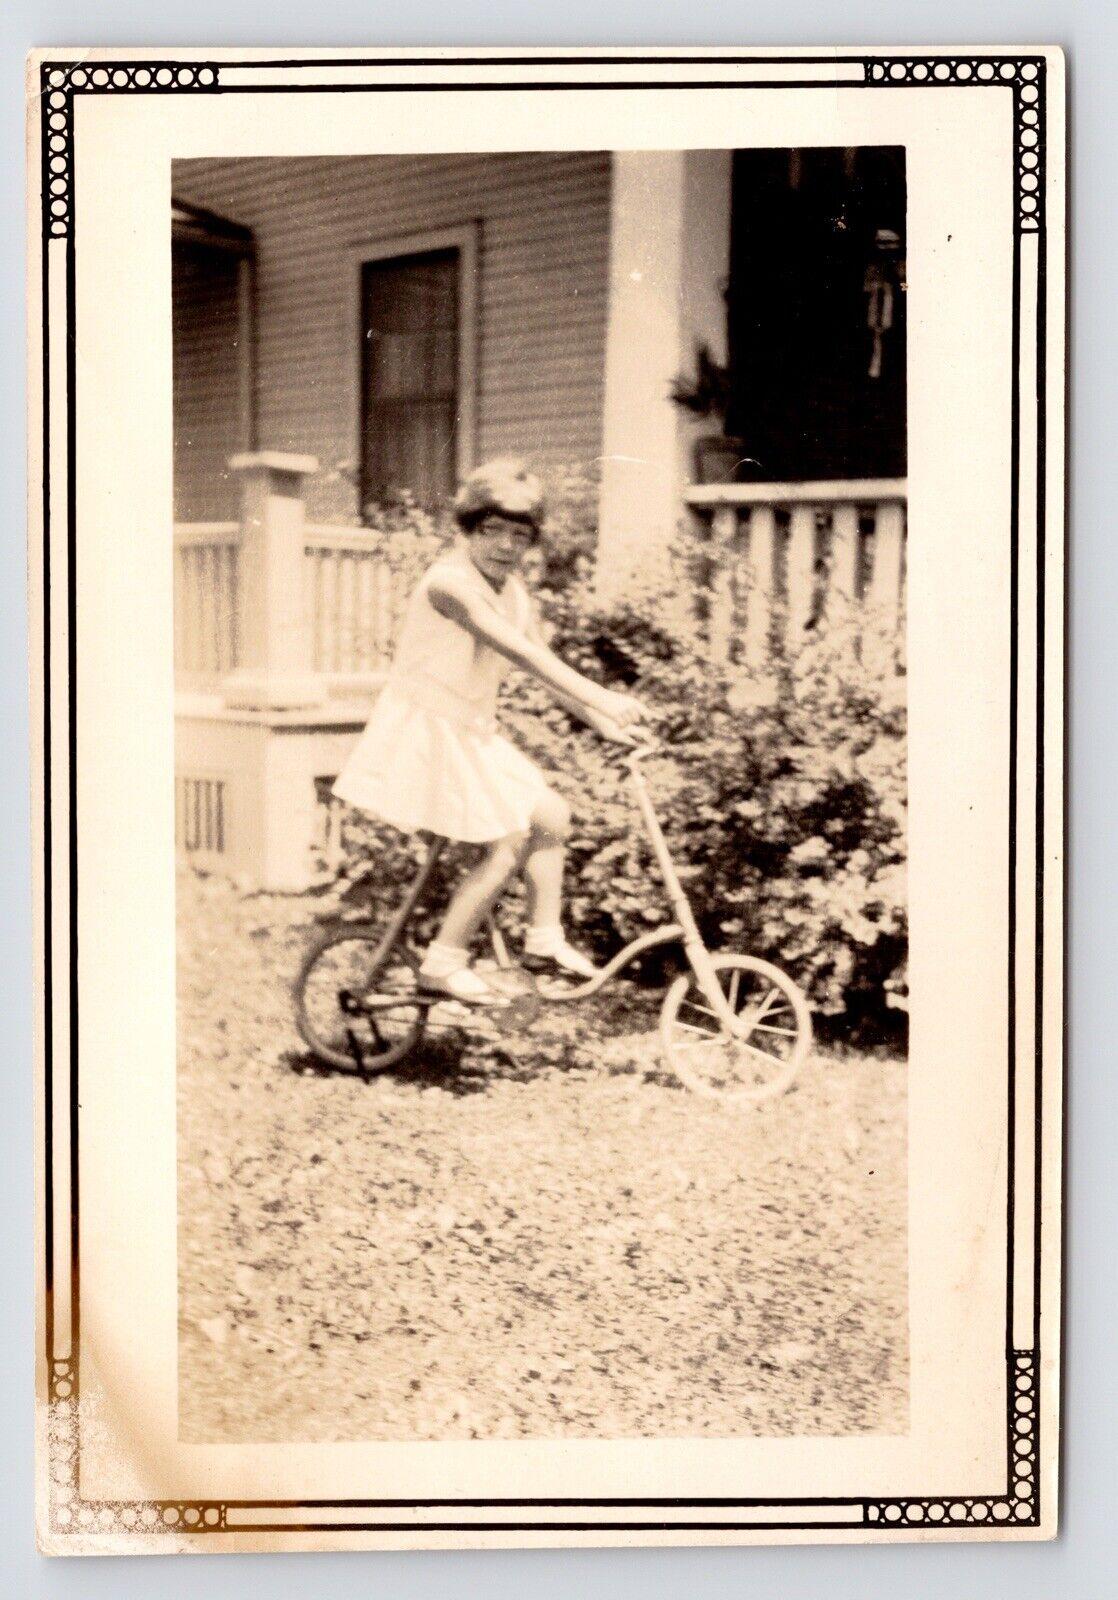 c1940s Tomboy~Girl in Dress on Vintage Bicycle~VTG Original Photo